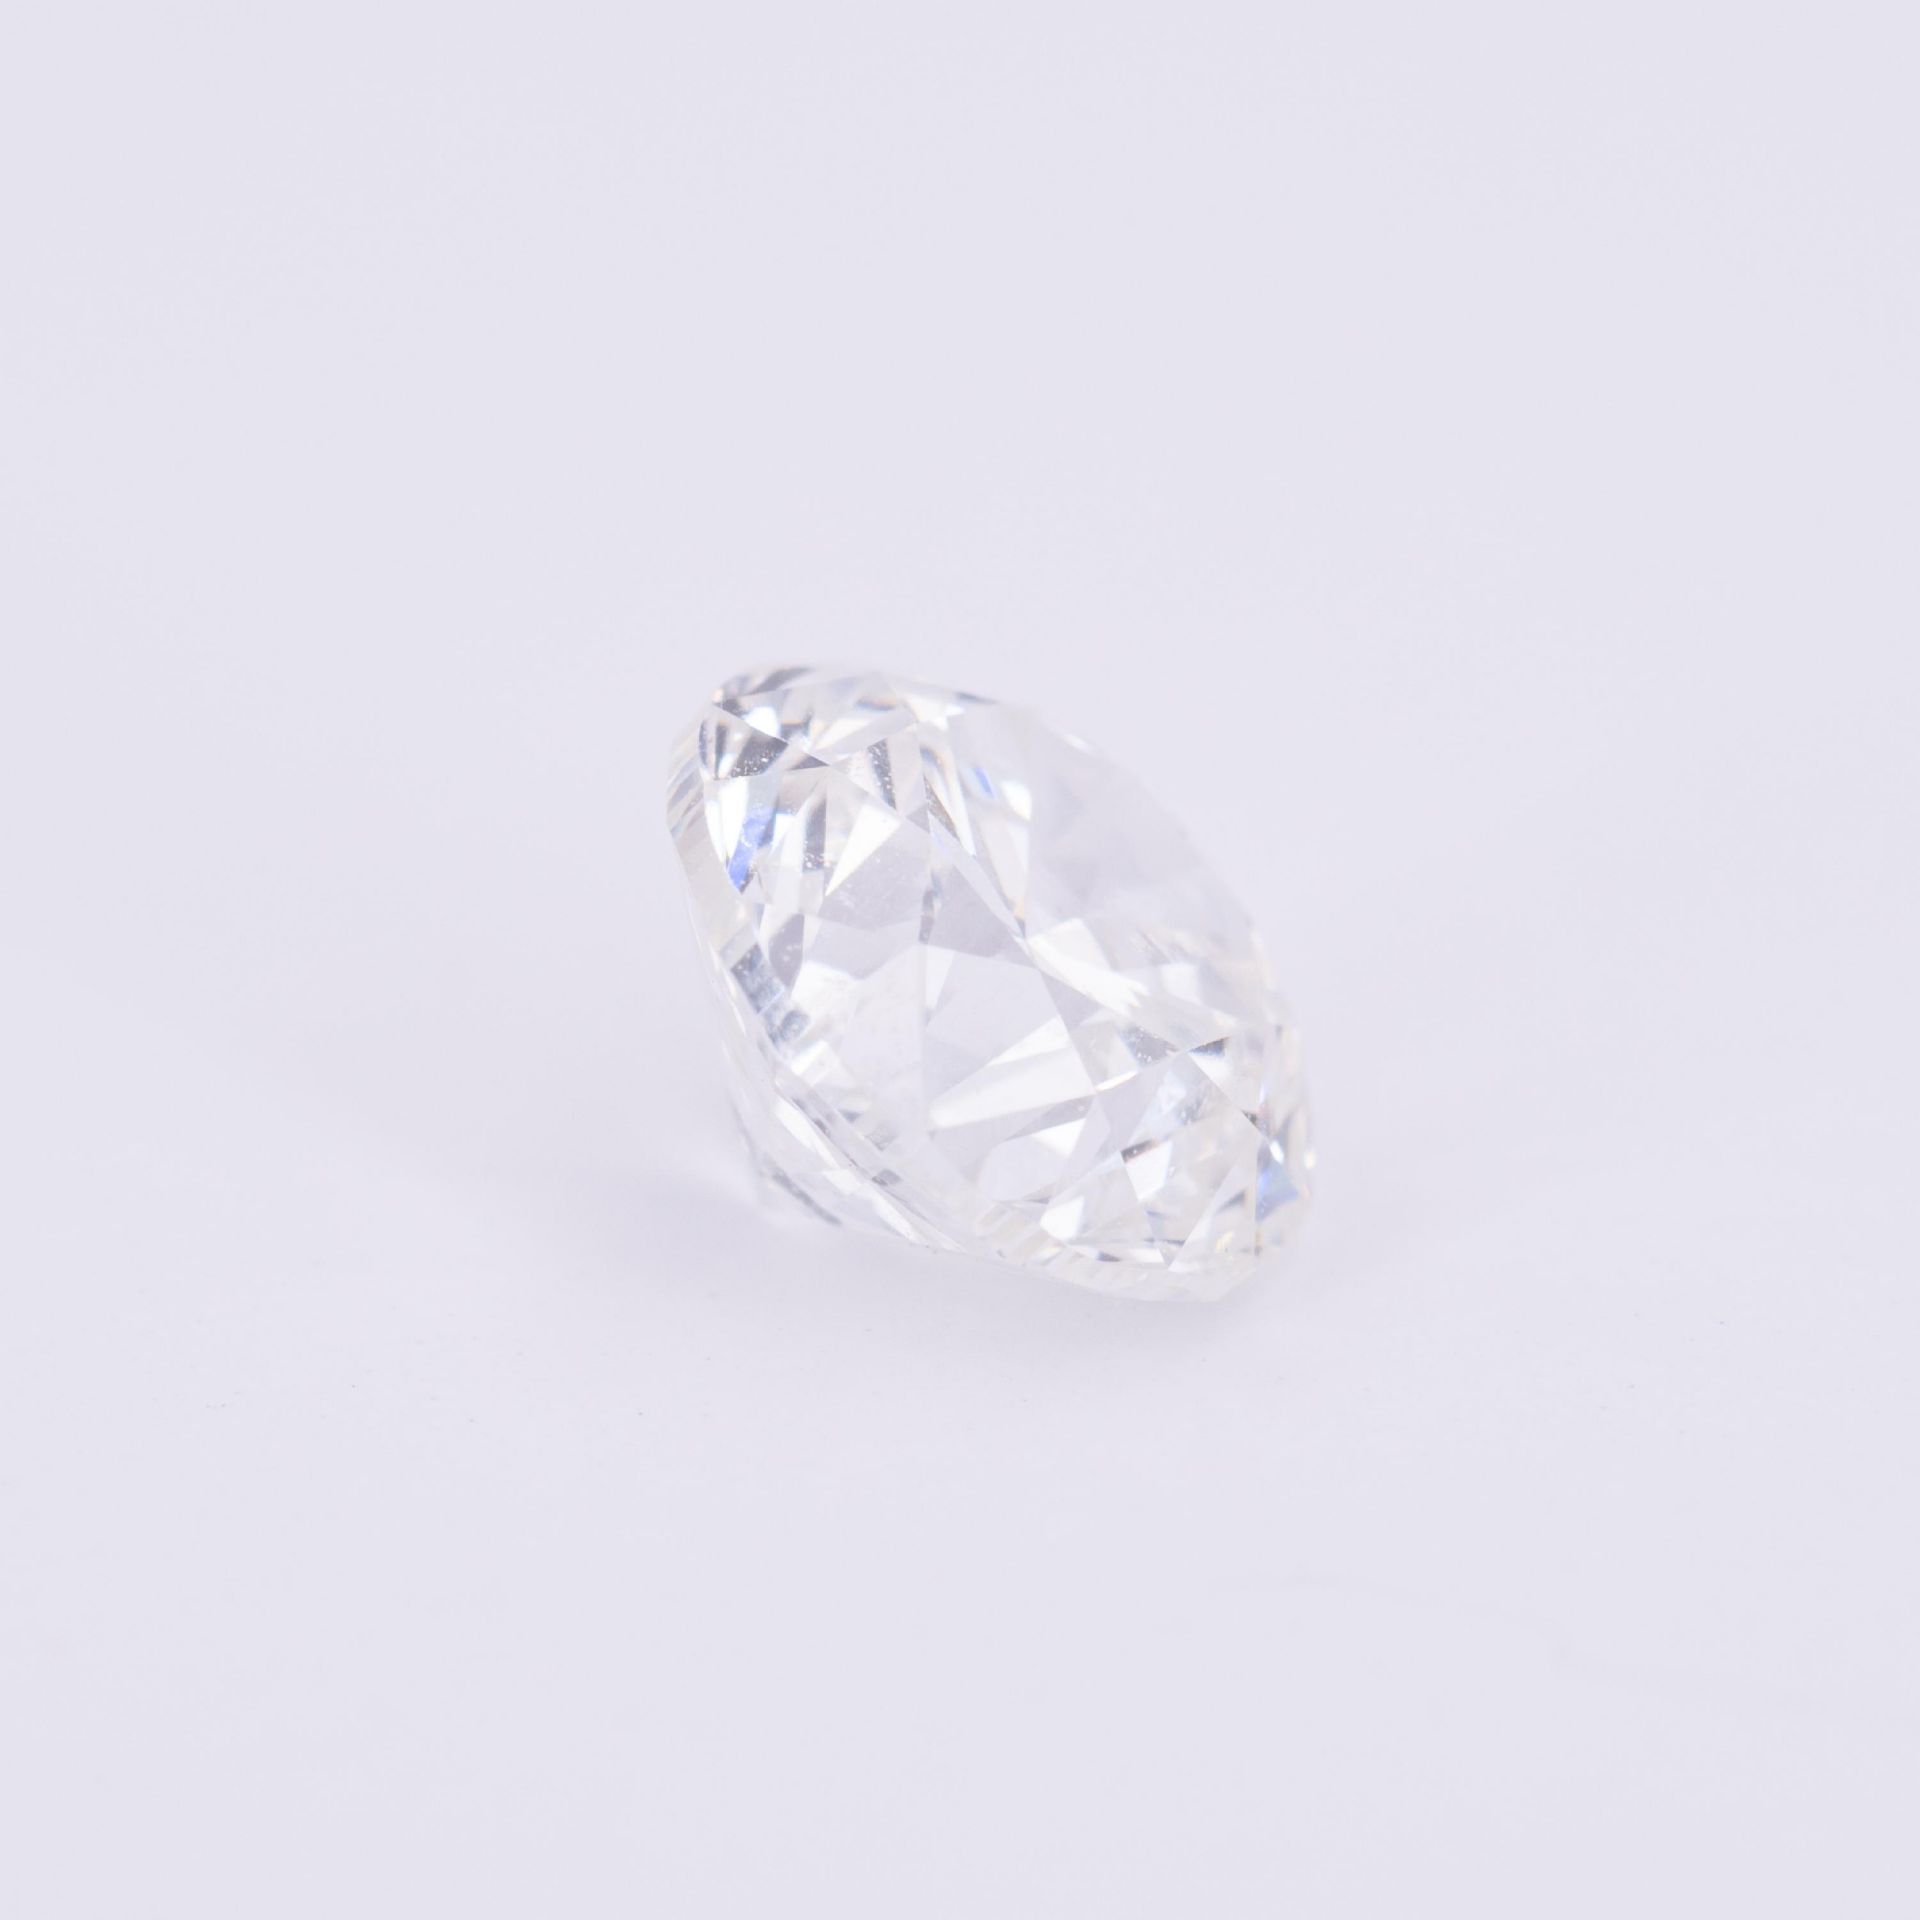 Loose Diamond - Image 3 of 3